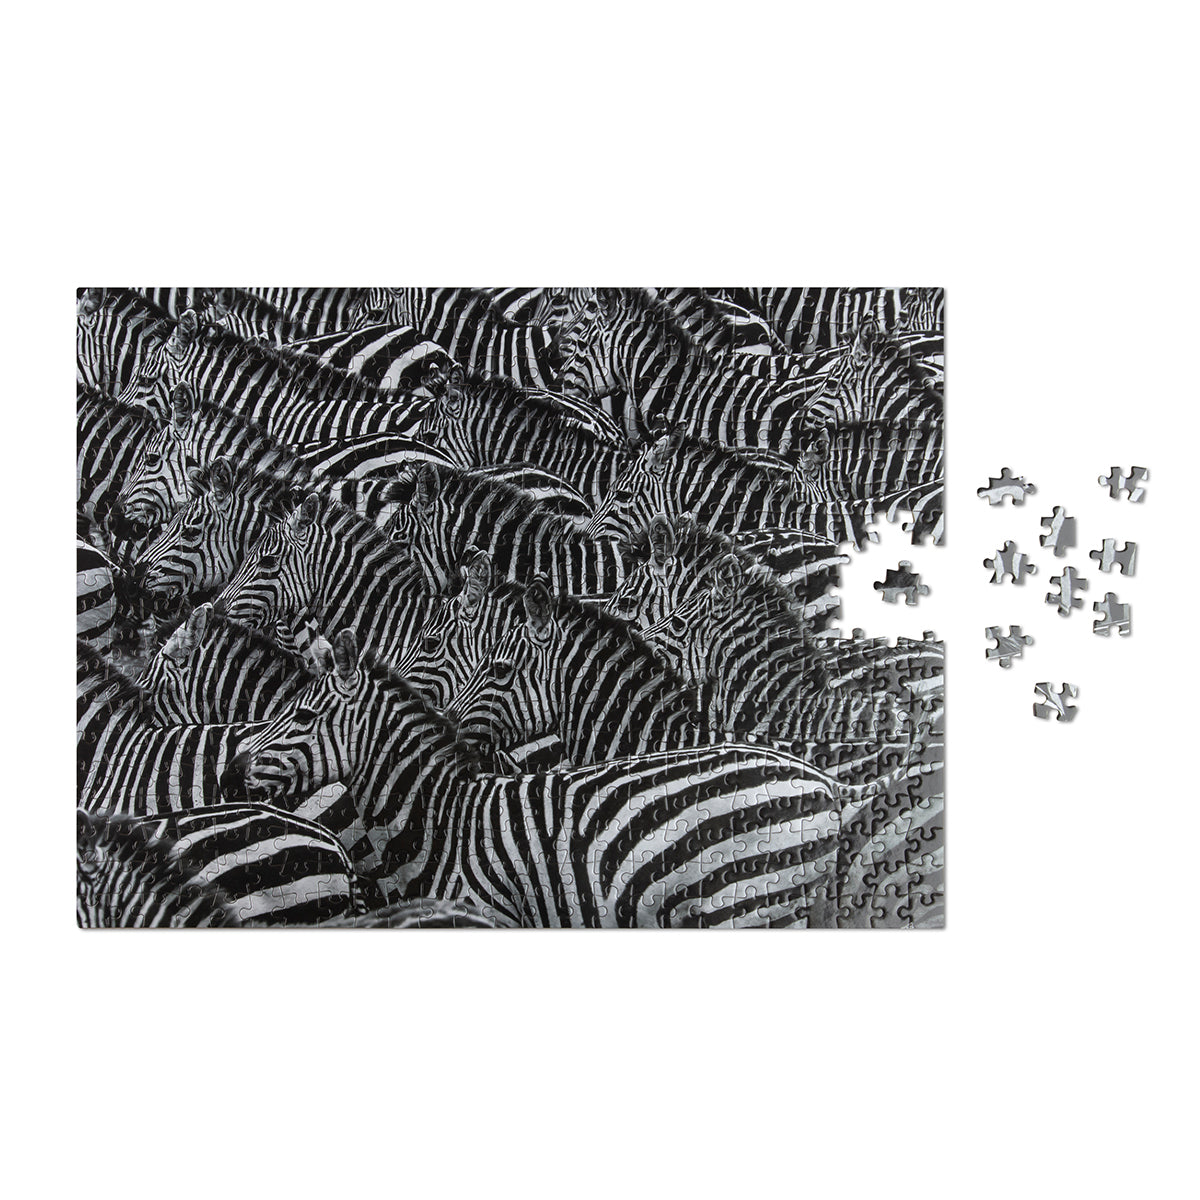 Puzzle Zebra (500 Piece)